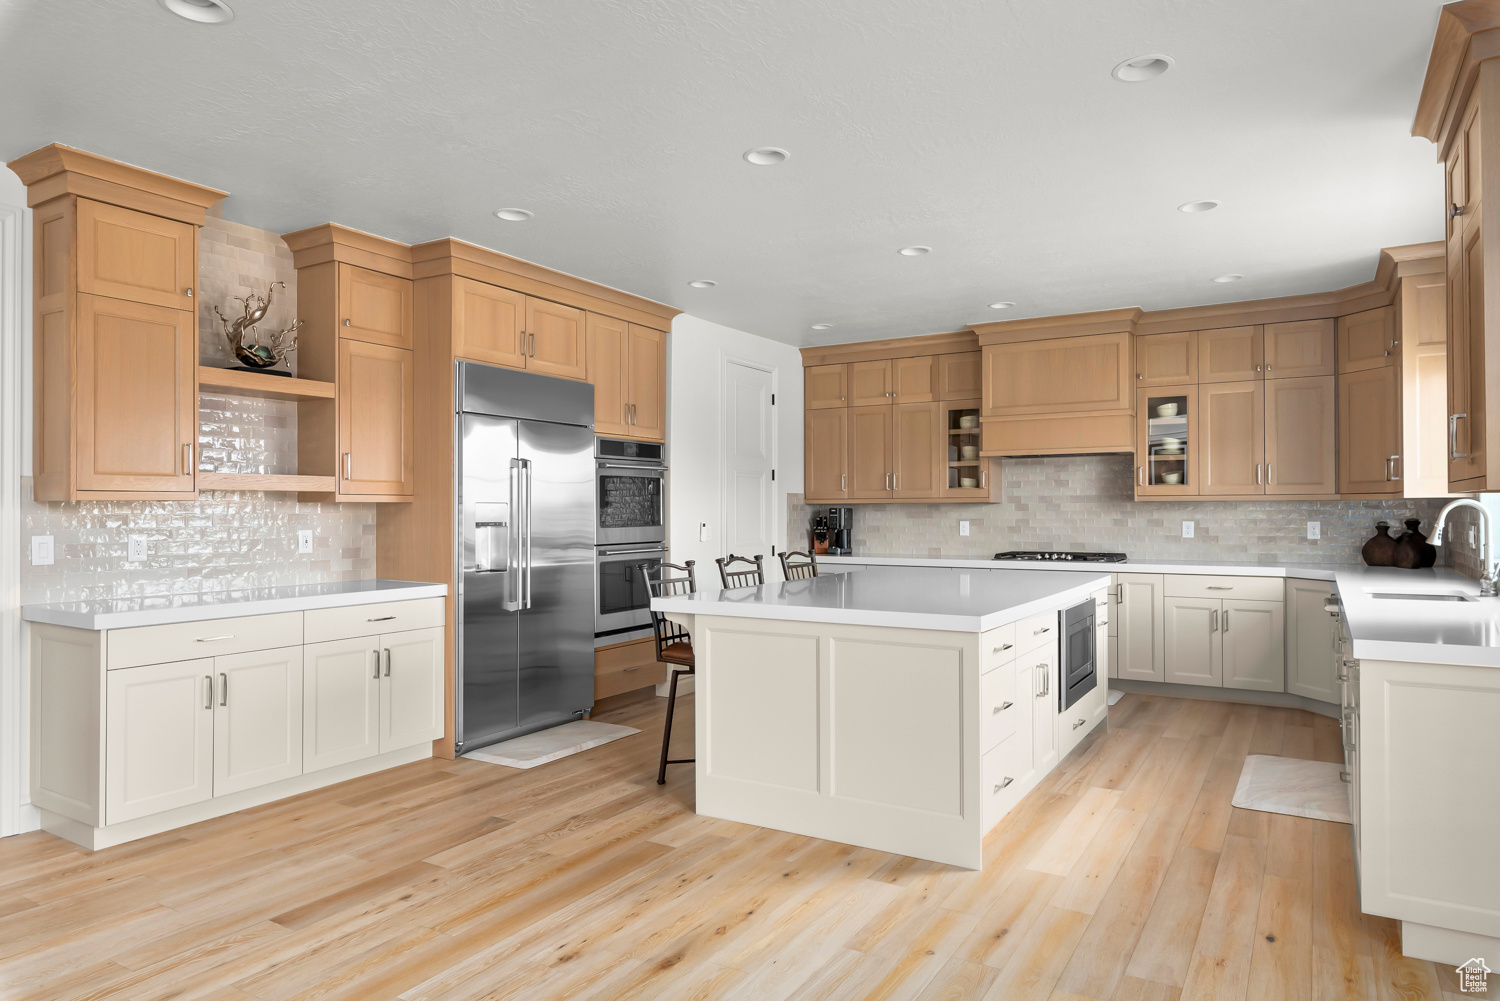 Kitchen with a center island, light hardwood / wood-style floors, tasteful tile backsplash, premium range hood, and built-in appliances. Double Oven, walk-in pantry.